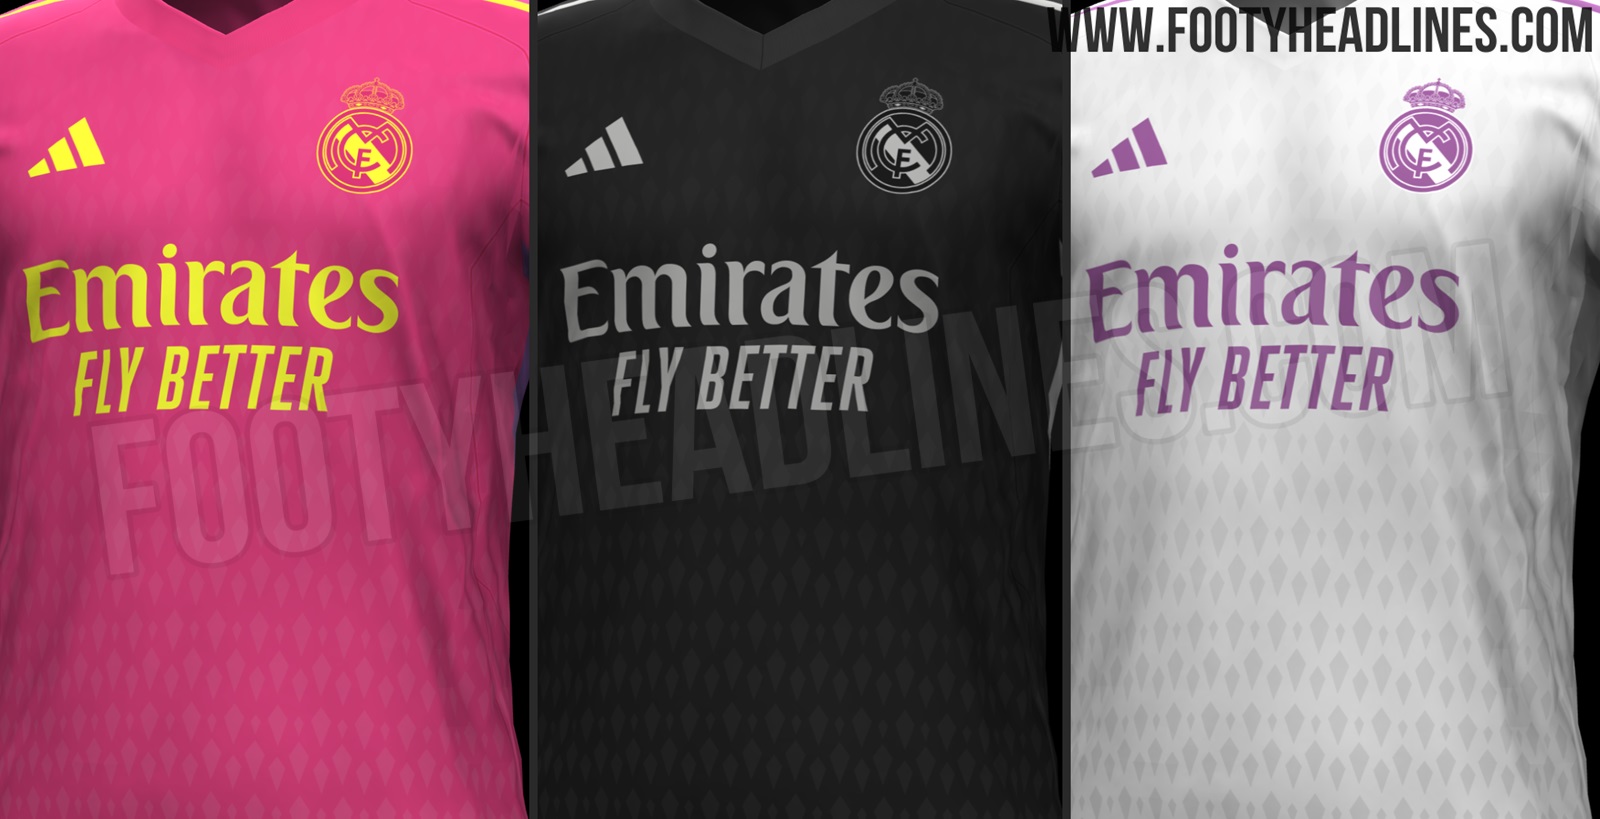 Real Madrid 23-24 Home Kit Released - Footy Headlines